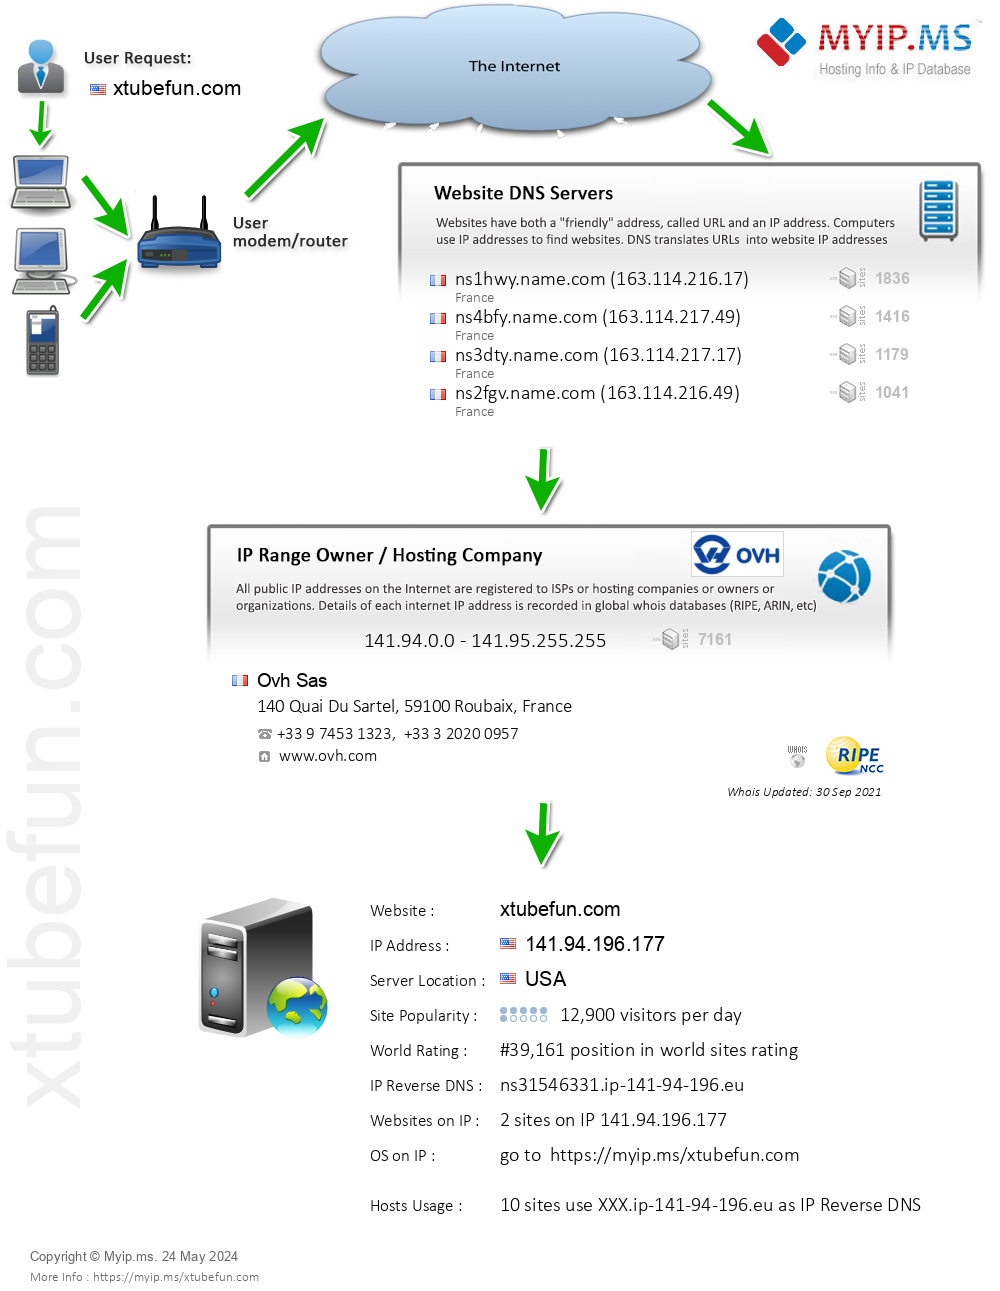 Xtubefun.com - Website Hosting Visual IP Diagram